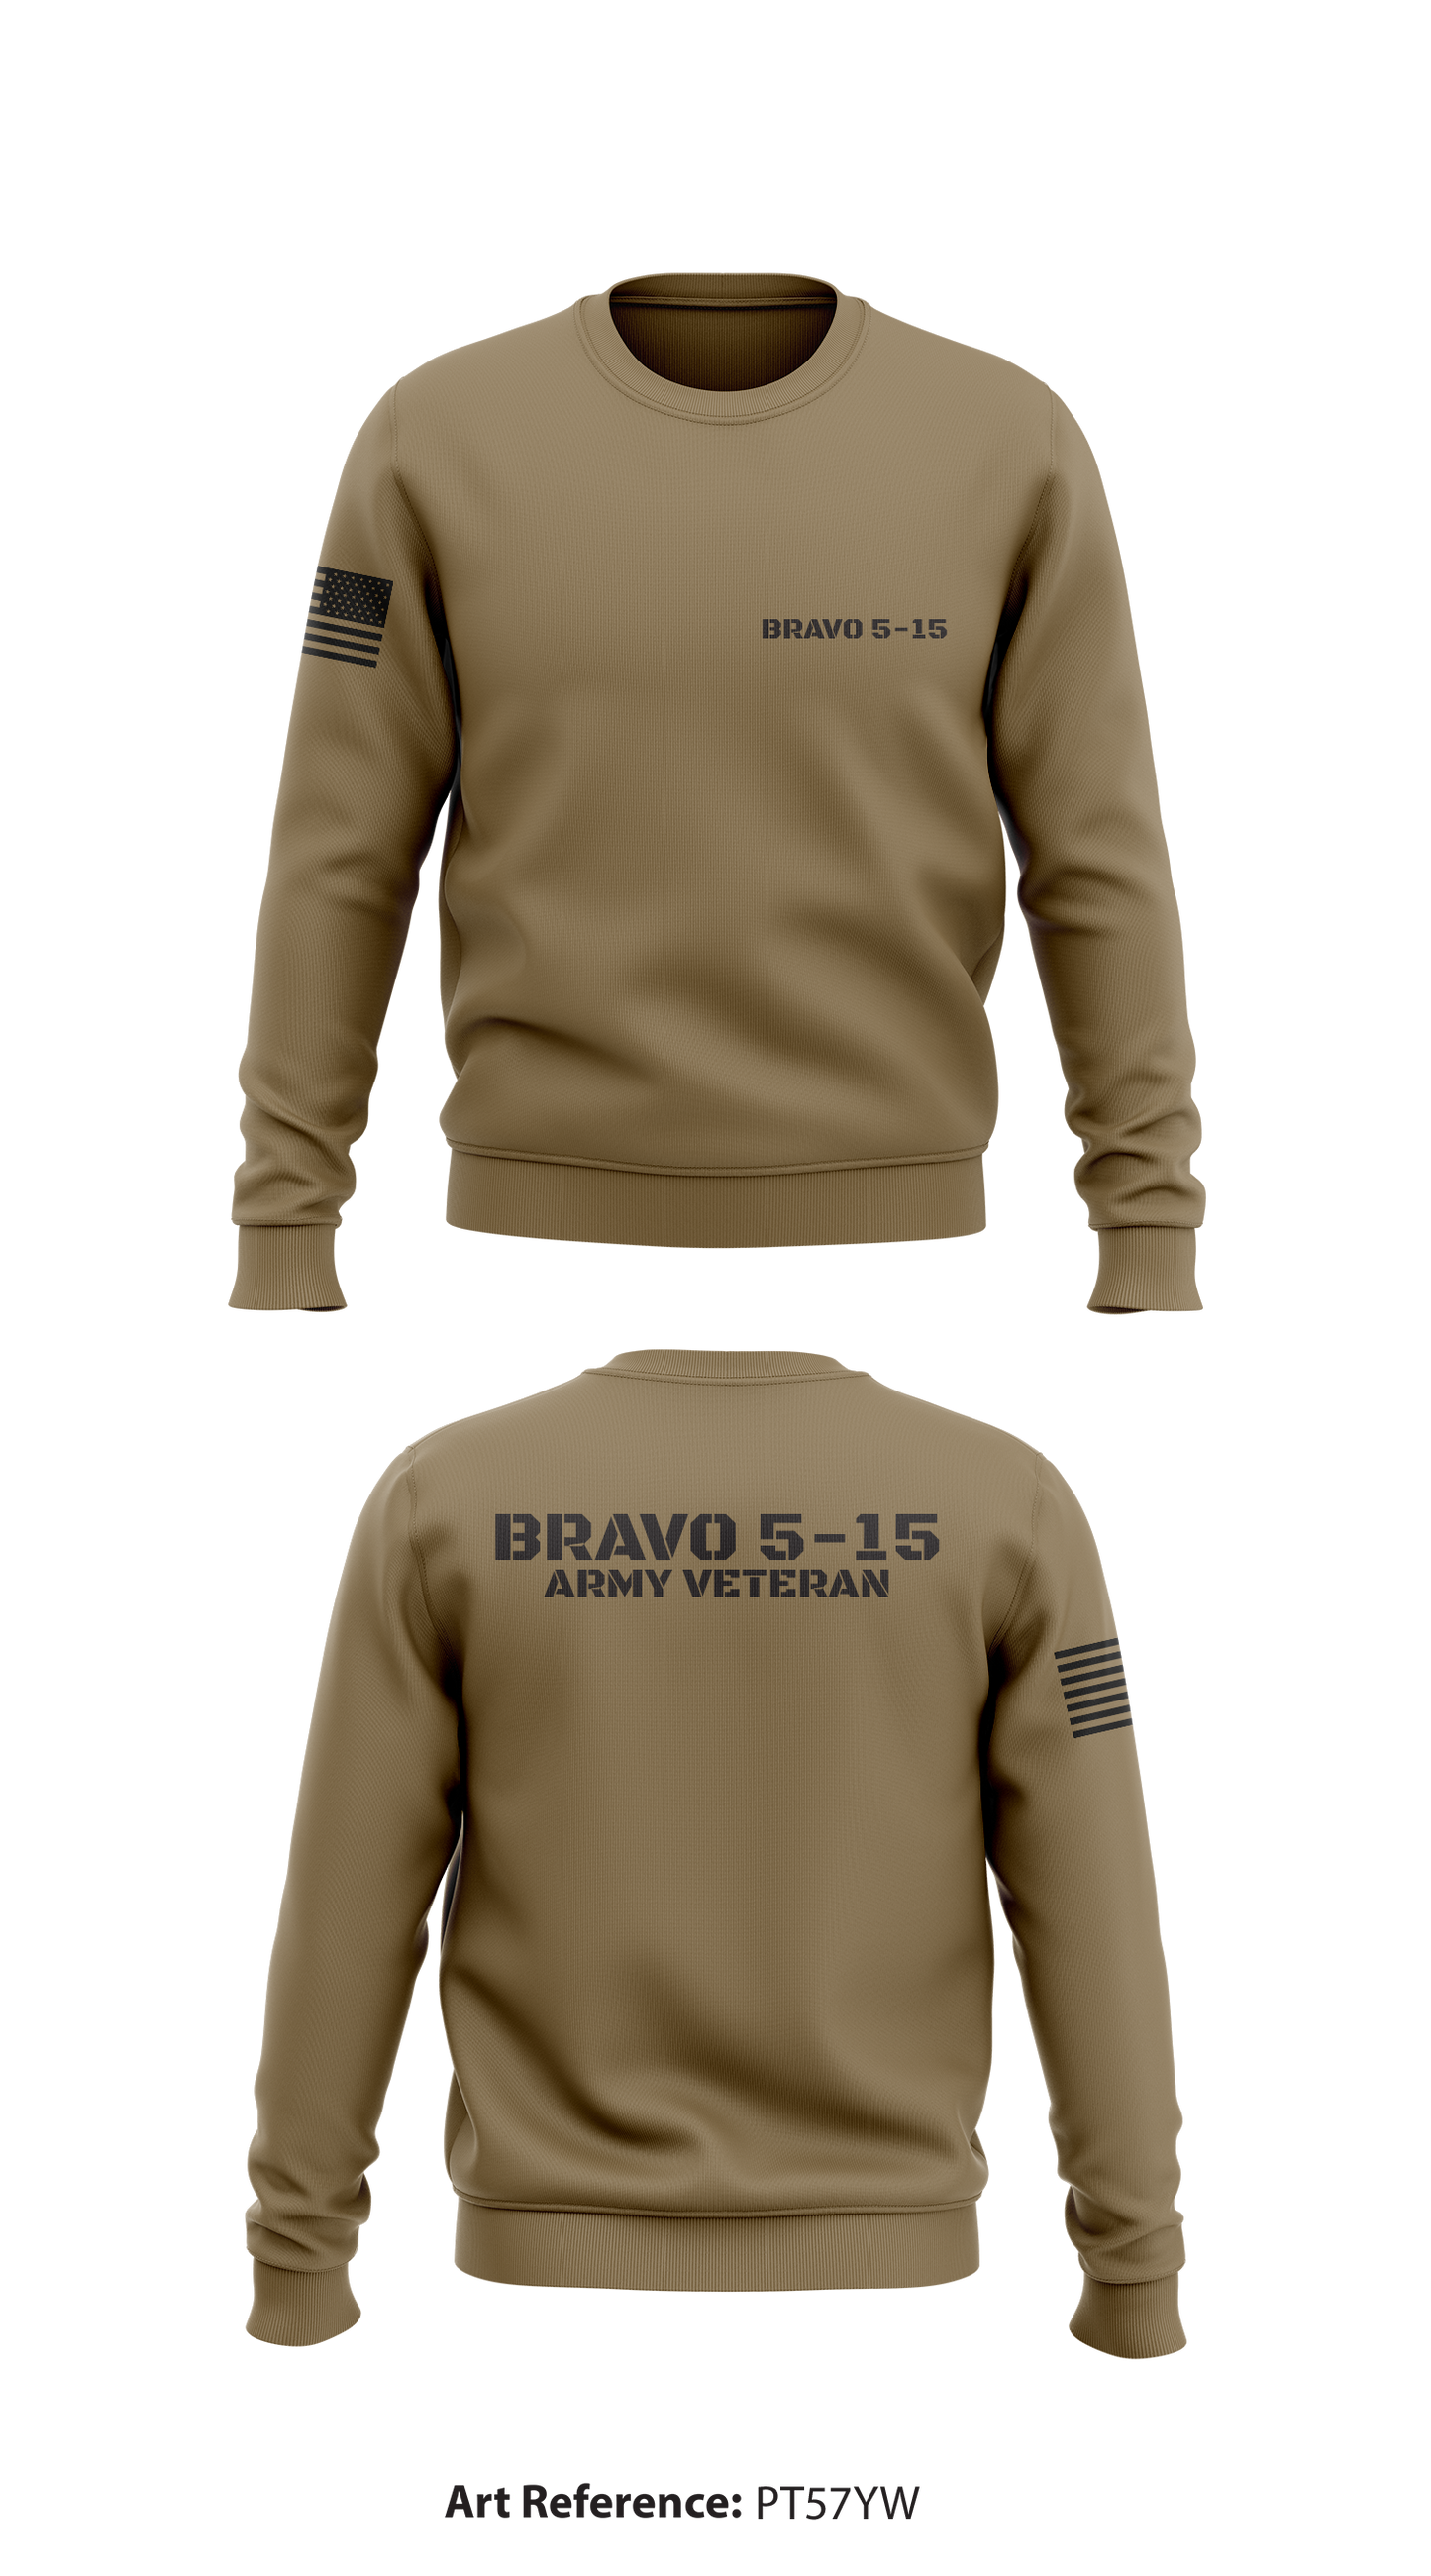 Bravo 5-15 Store 1 Core Men's Crewneck Performance Sweatshirt - pT57YW